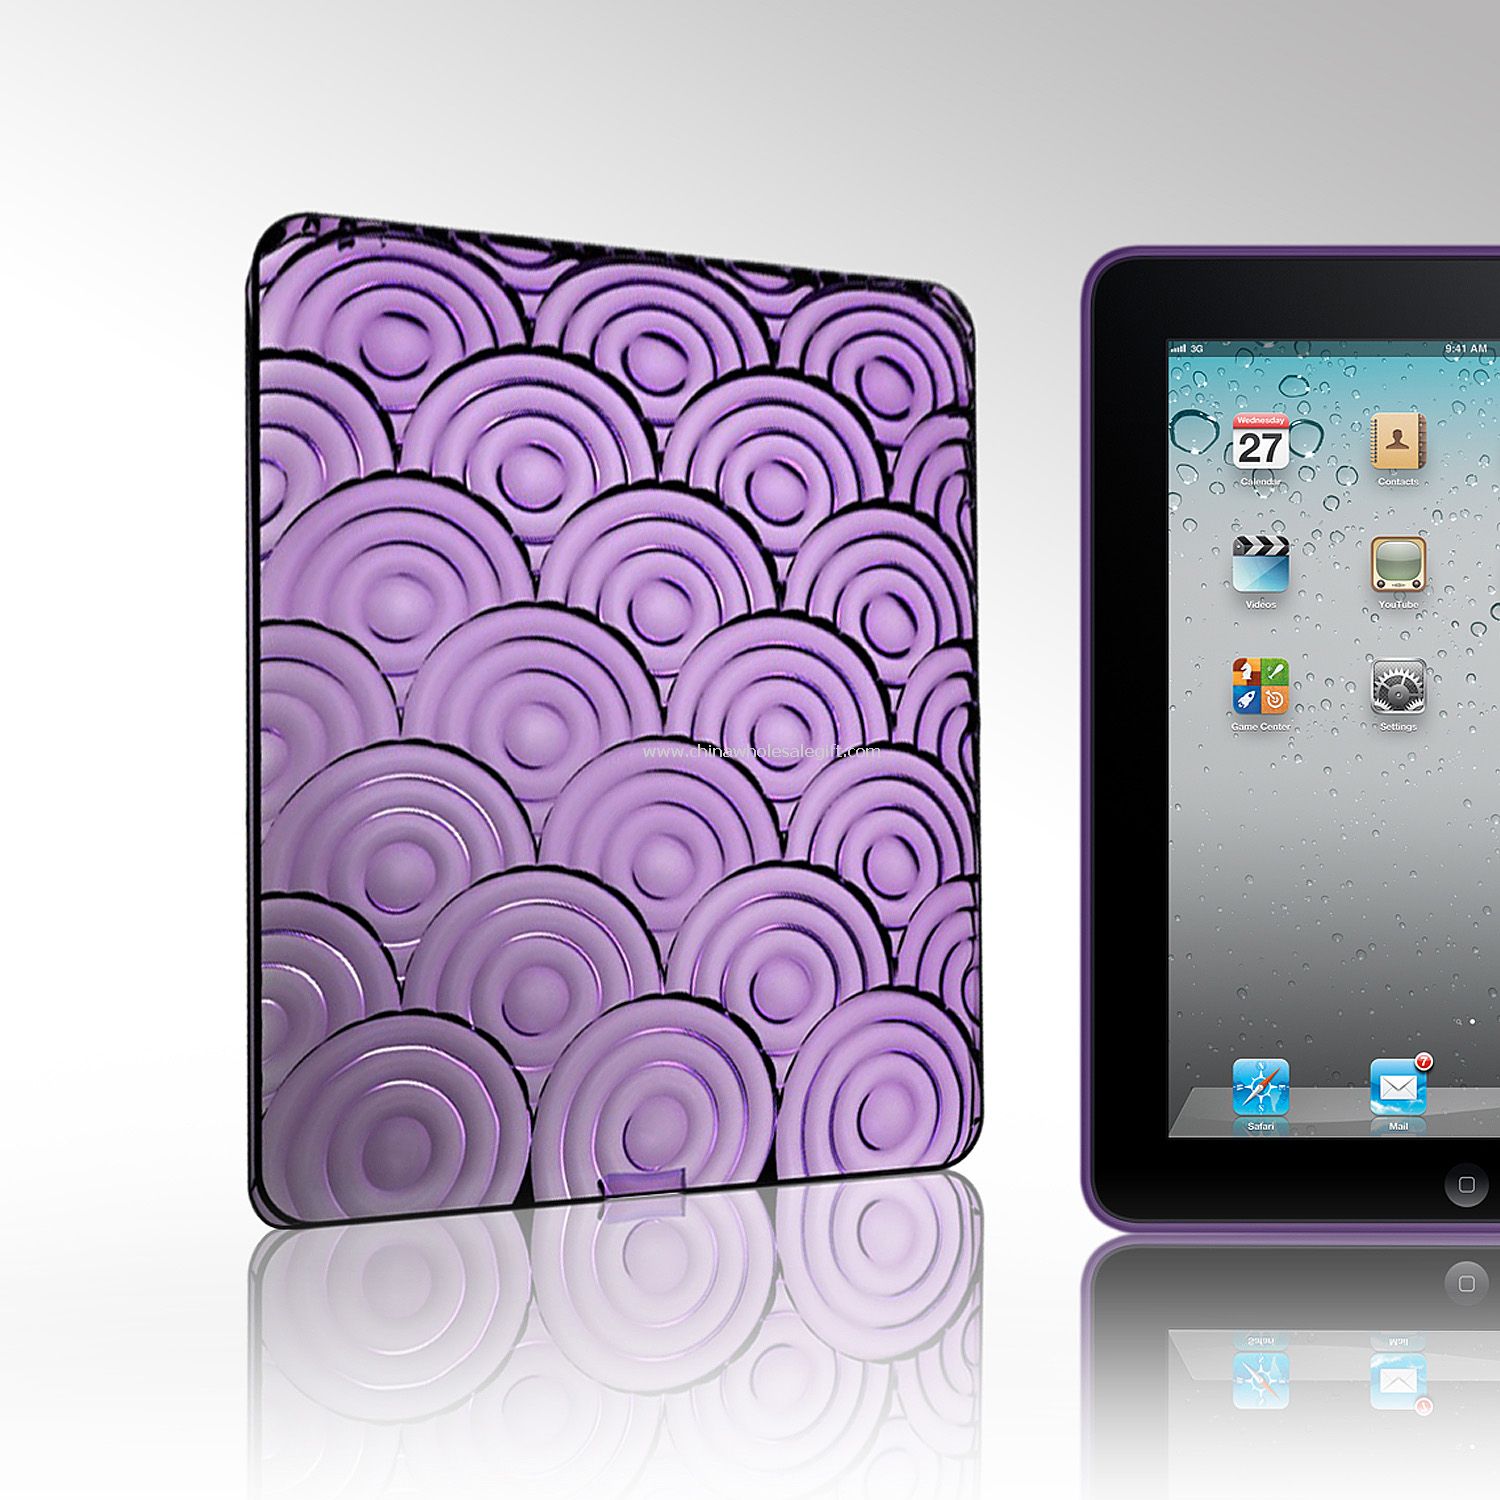 TPU iPad cases